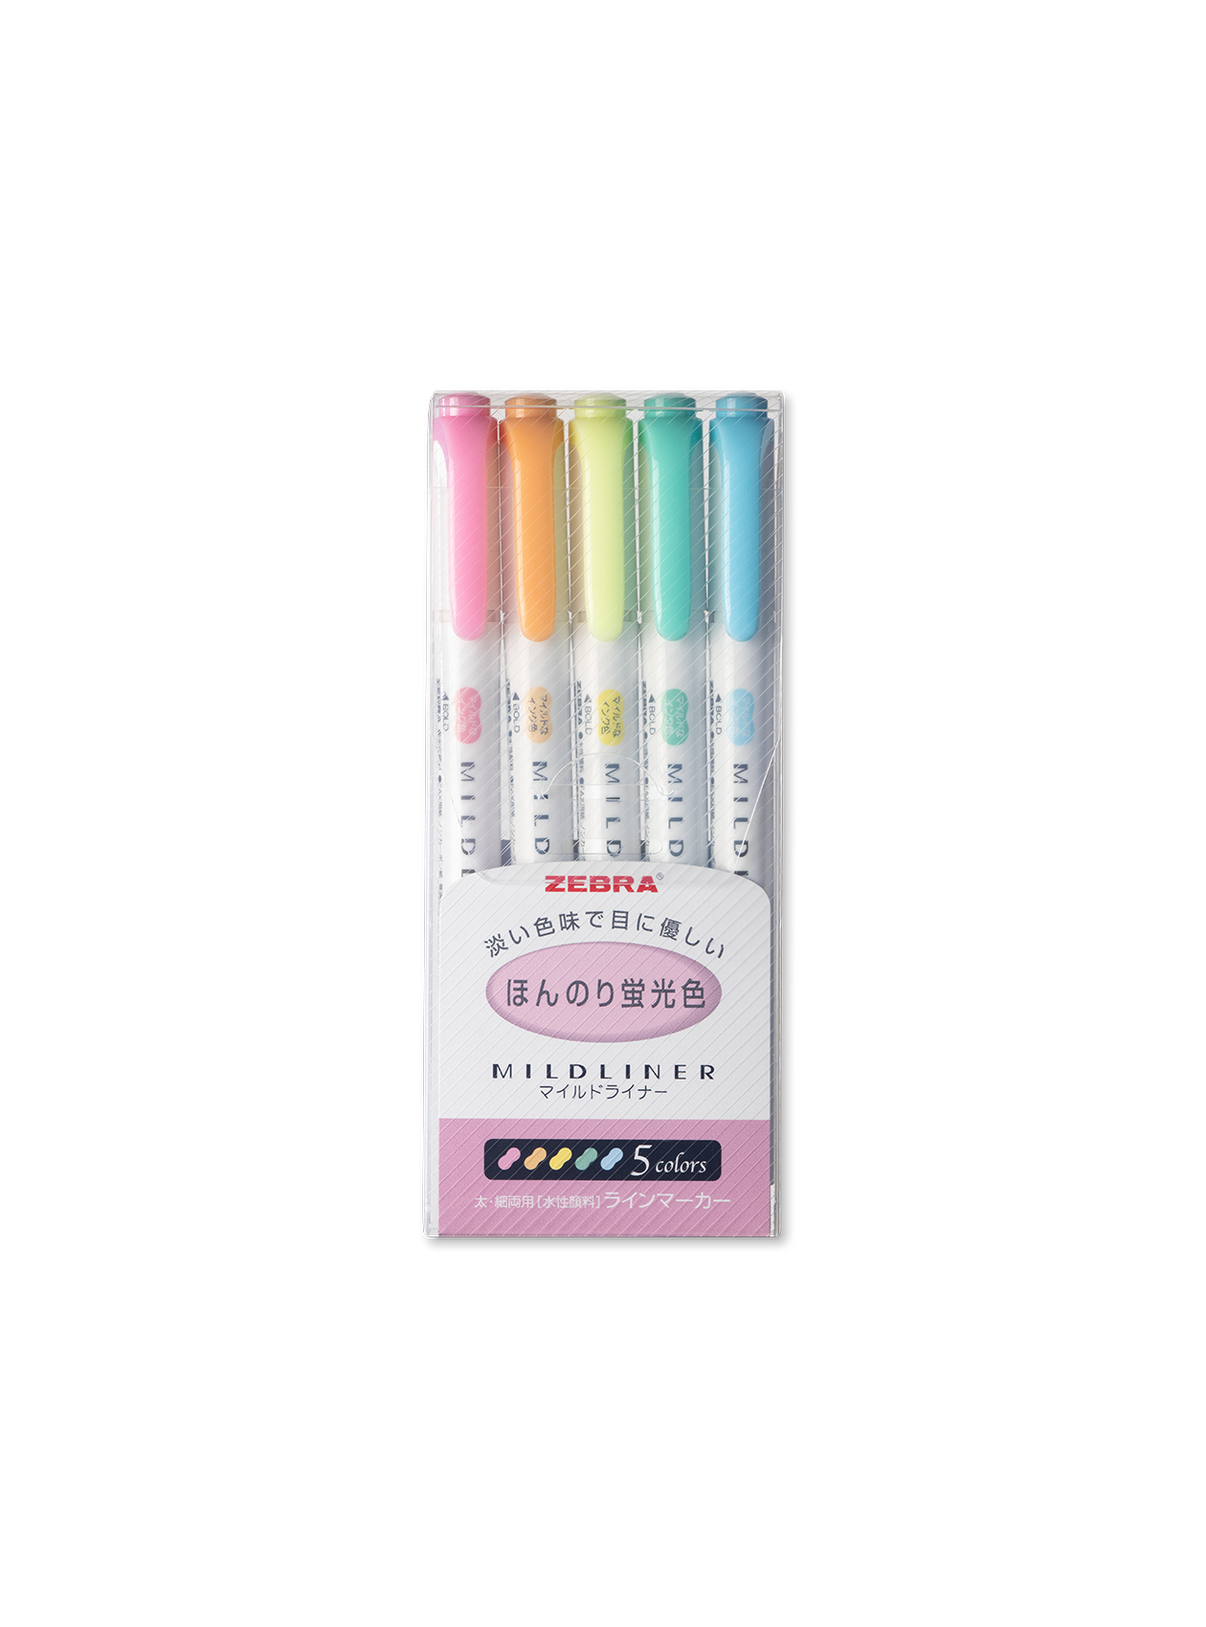 5 pastel mildliner set with double-sided highlighter inside packaging